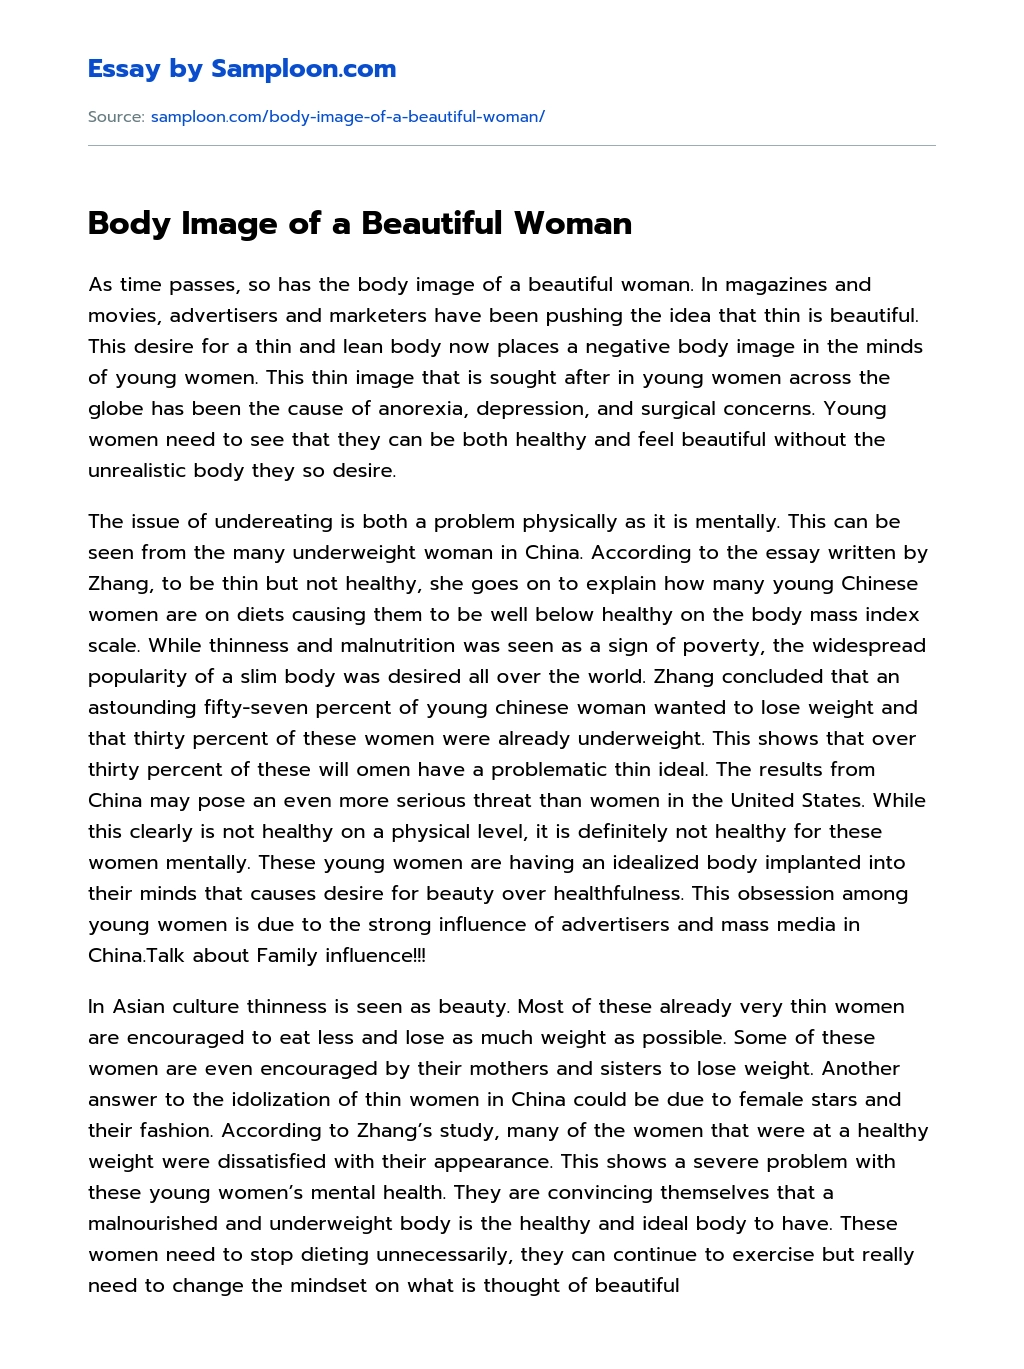 Body Image of a Beautiful Woman essay